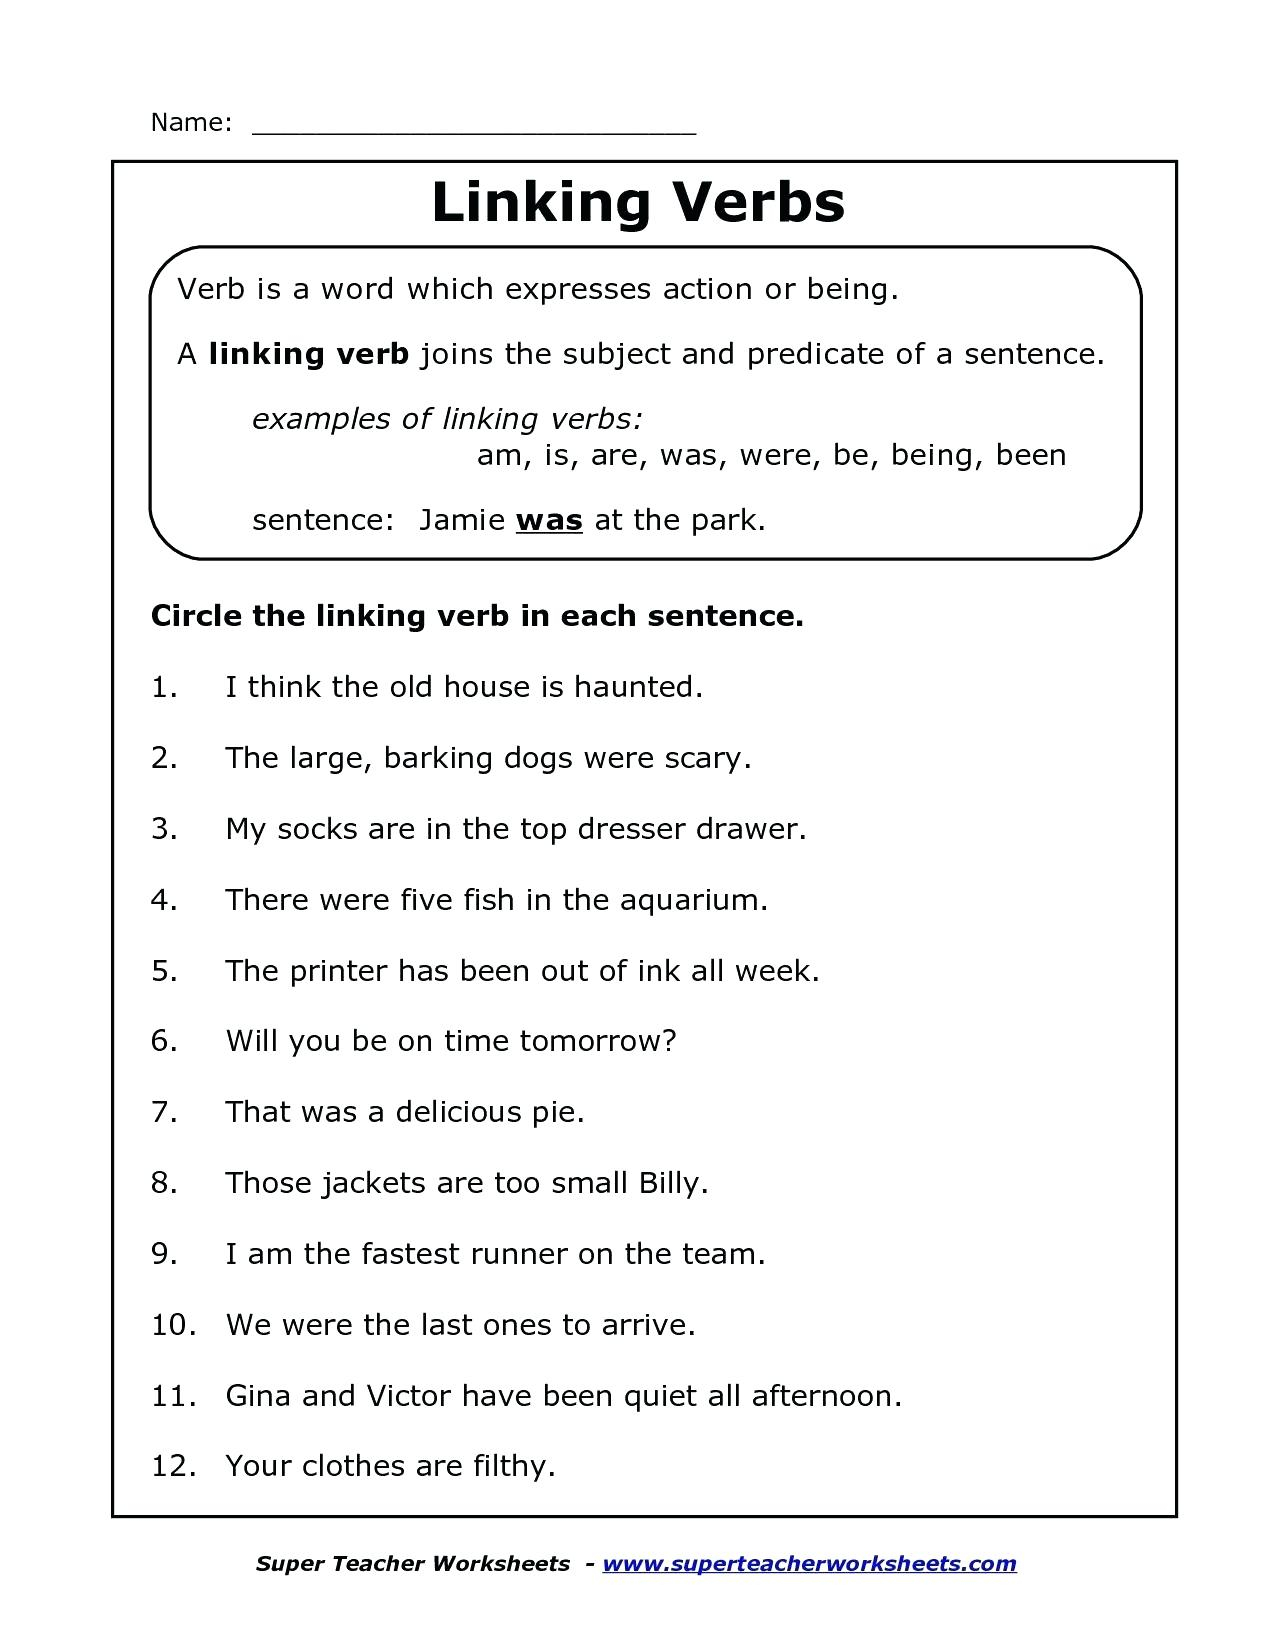 verbs-worksheets-for-grade-1-db-excel